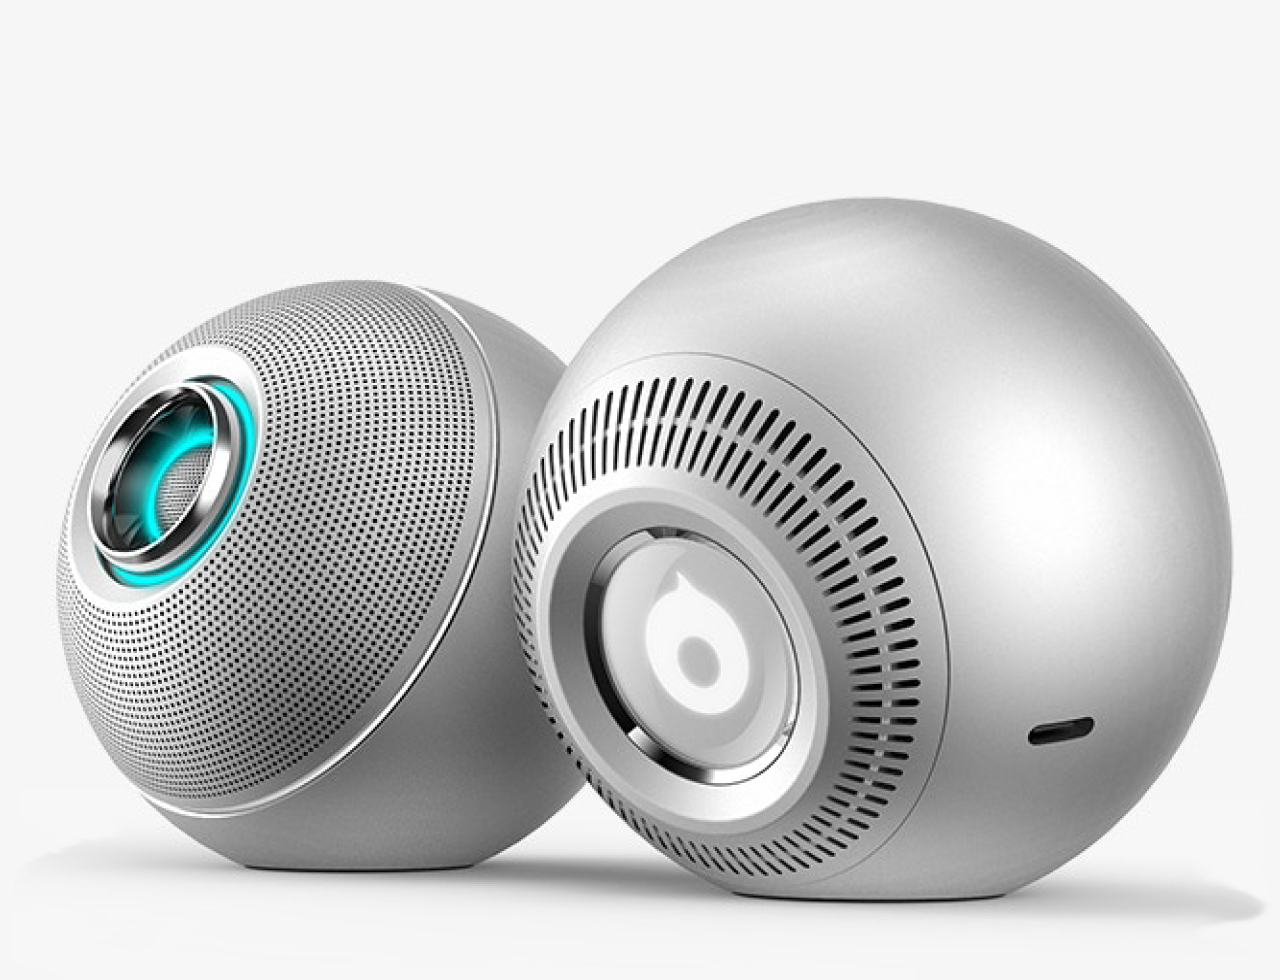 The Wireless Speaker in silver colors